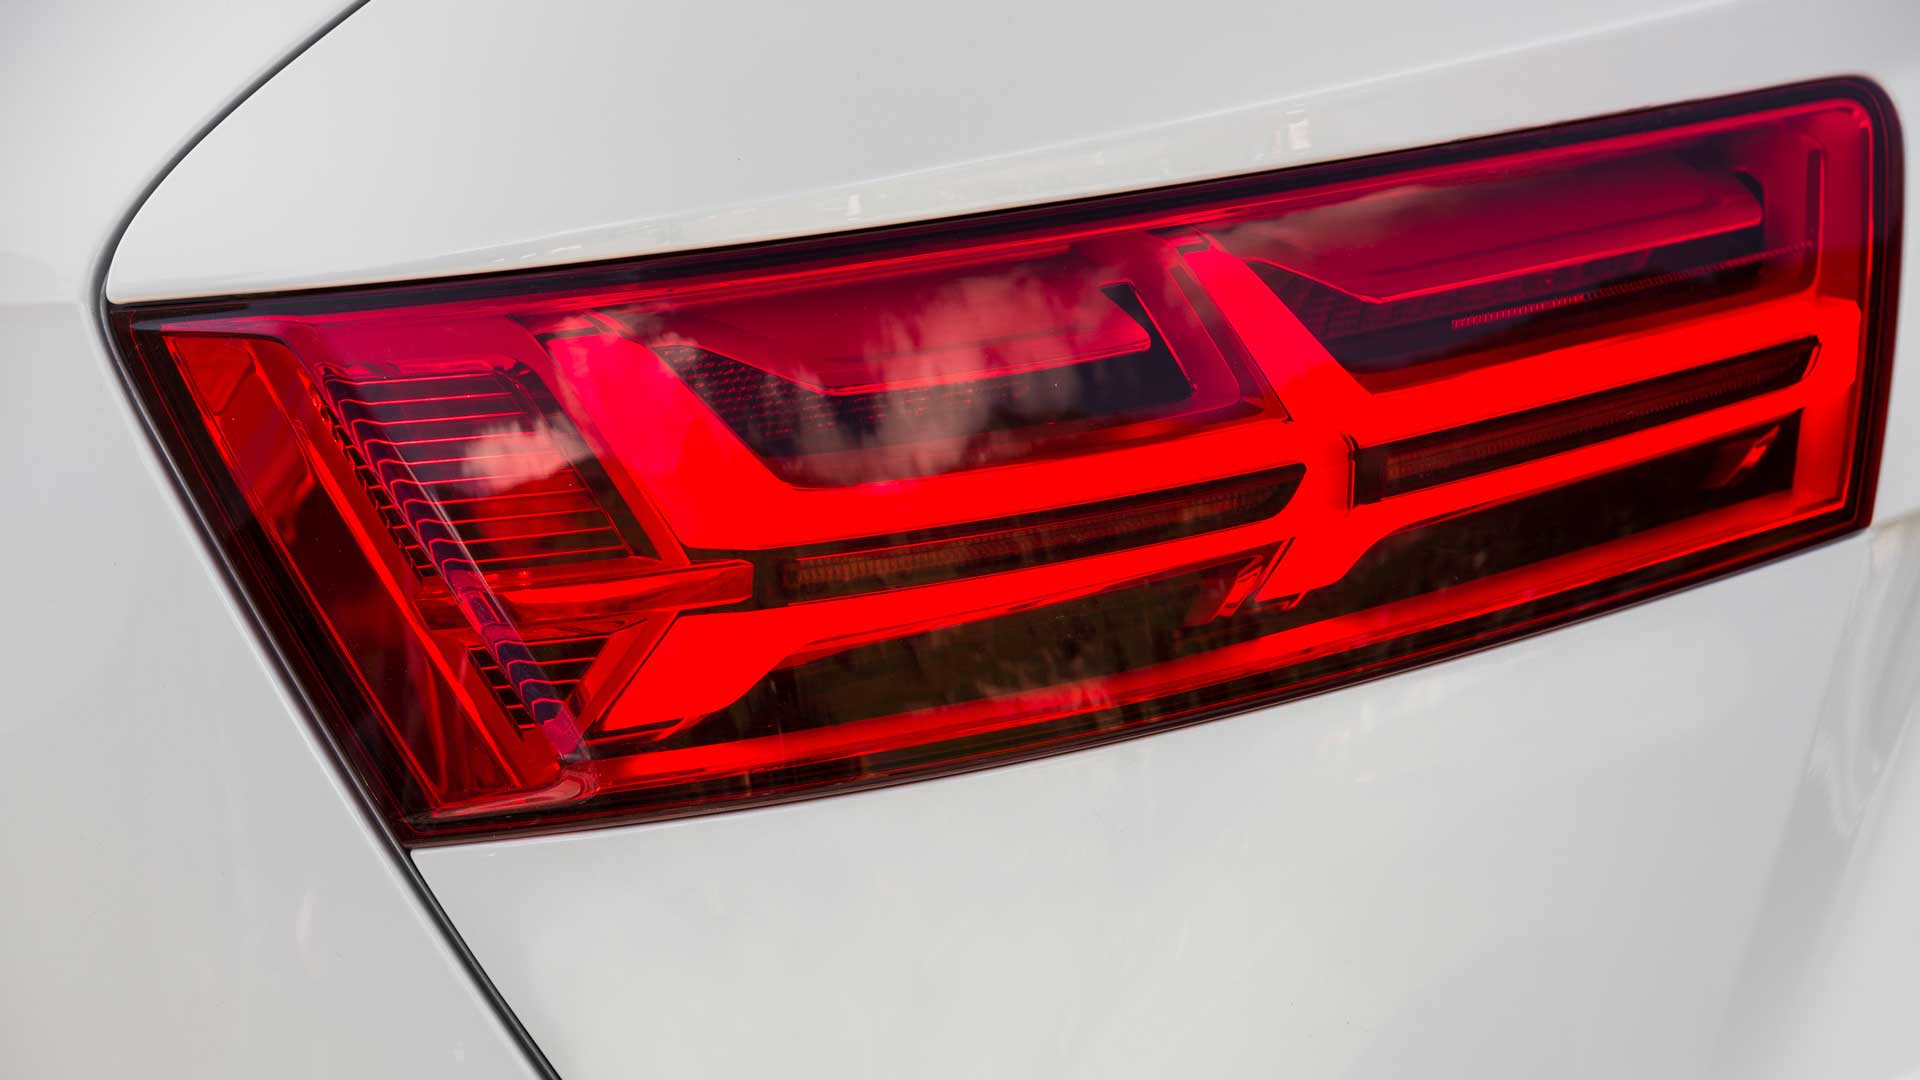 Audi Q7 2016 Technology Exterior